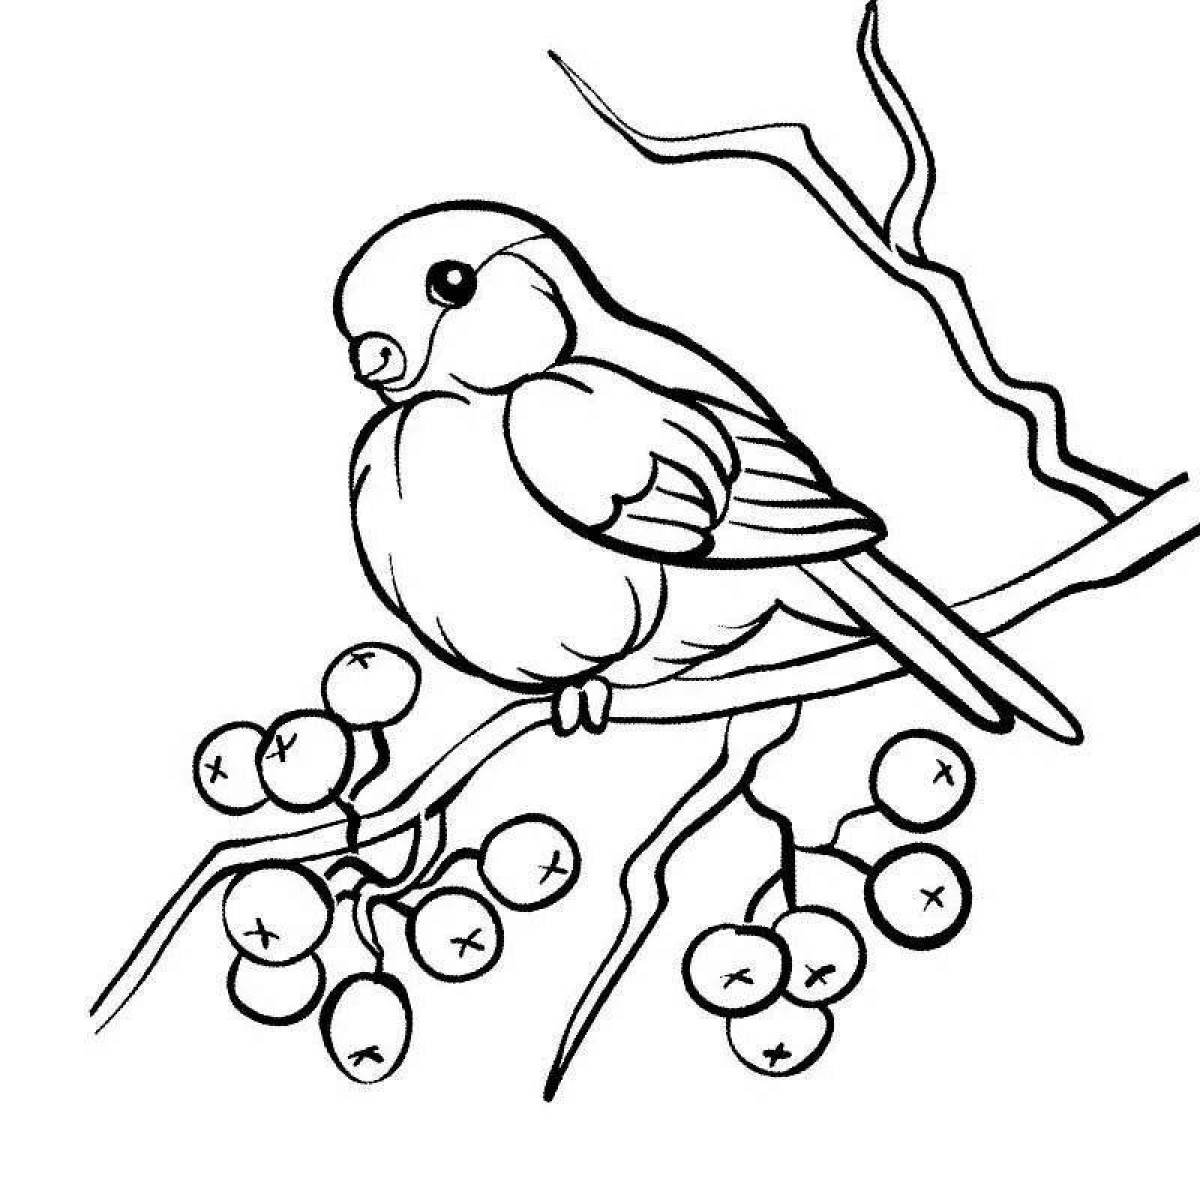 Bird on branch #5